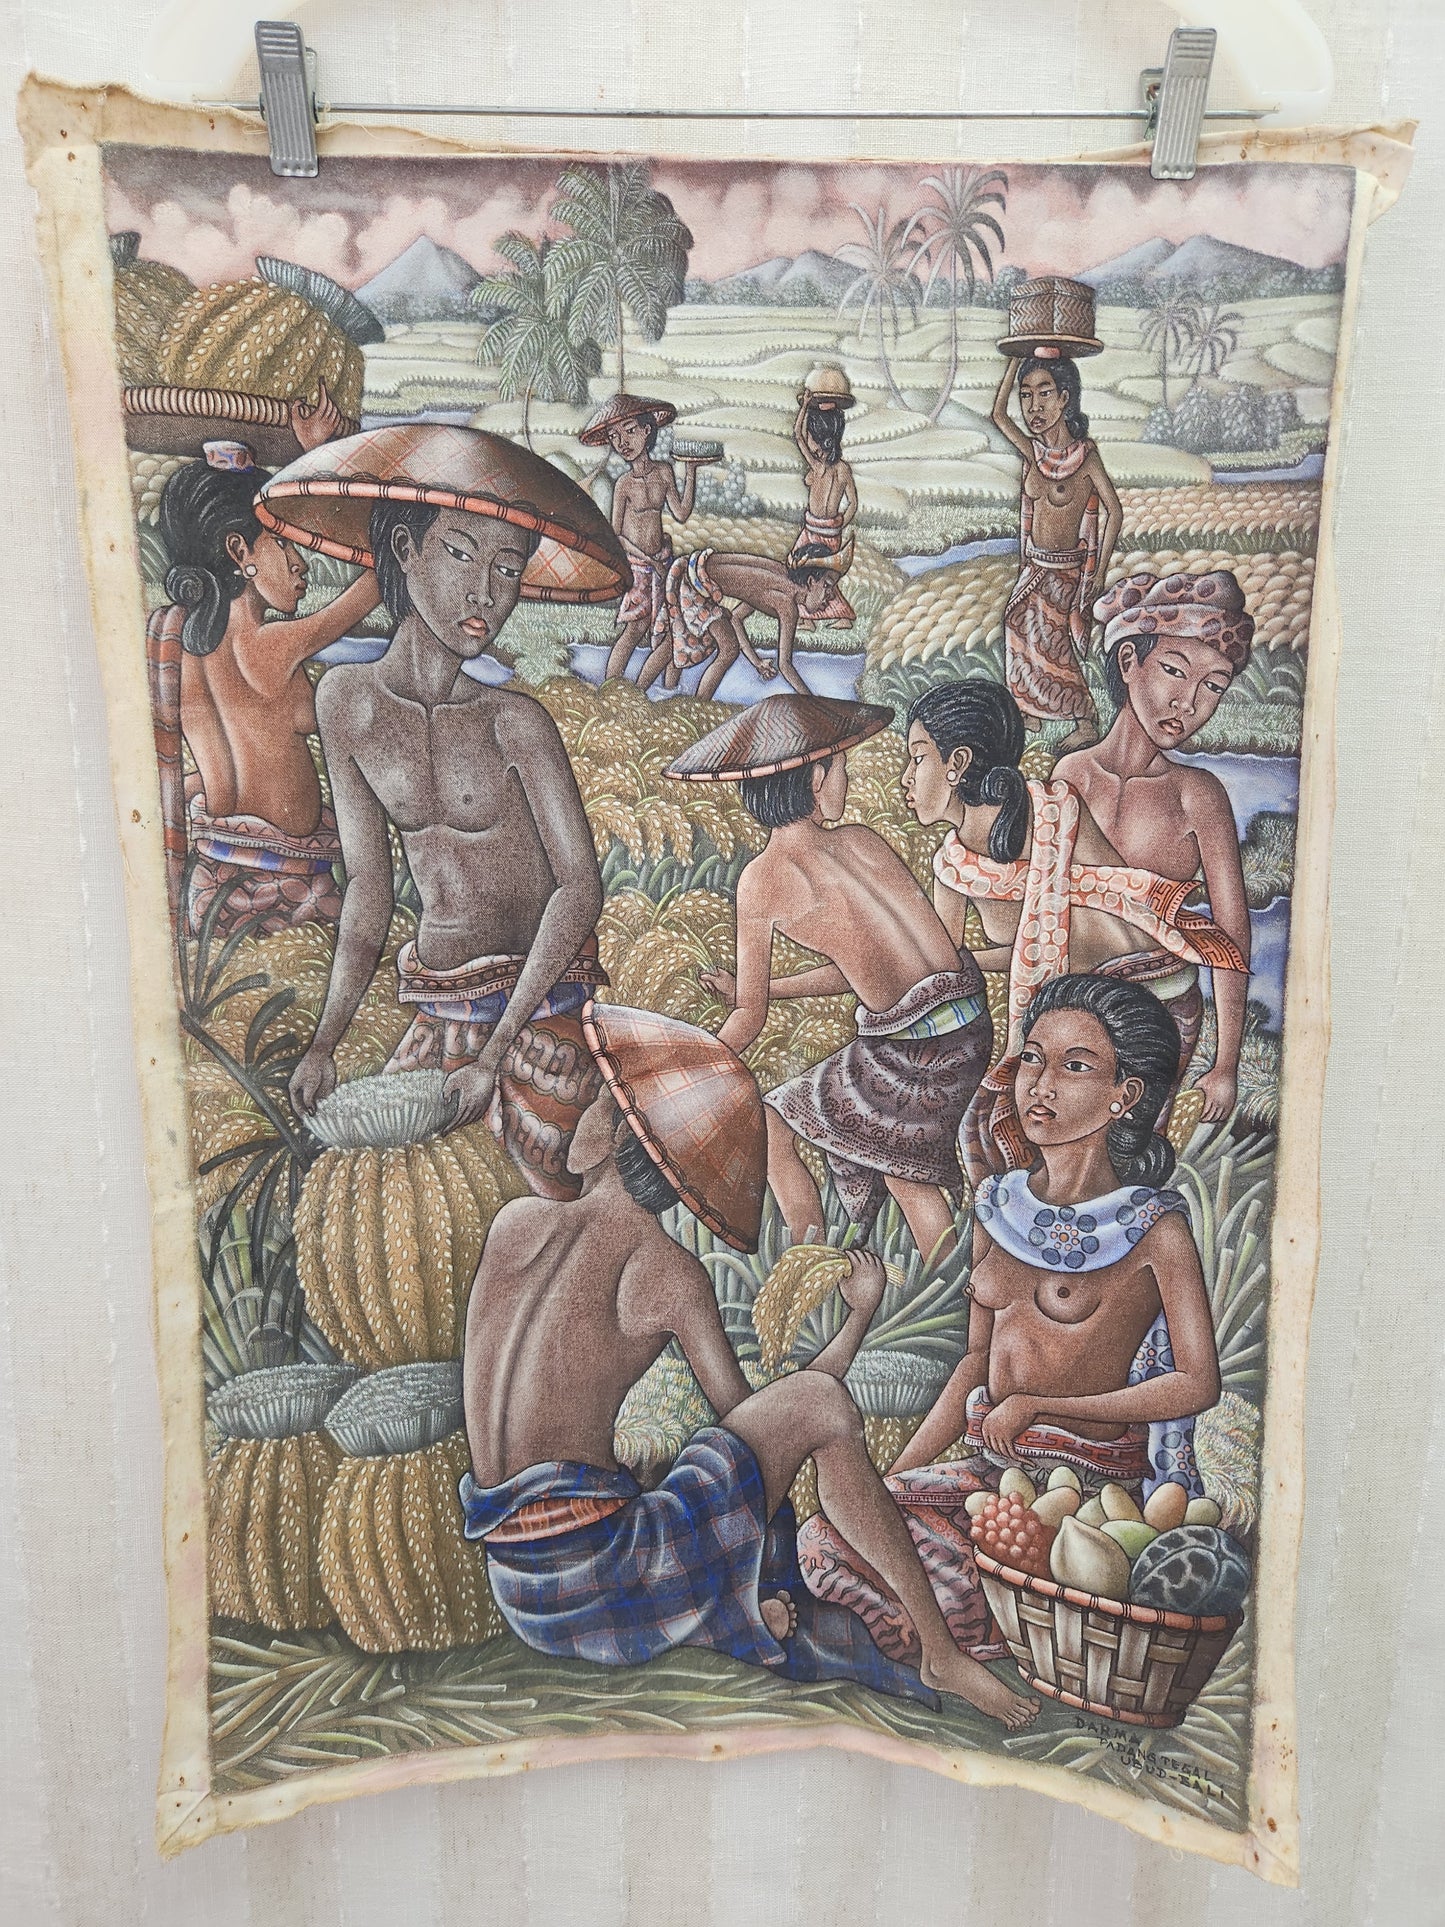 VTG - Darma - Padangtegal Ubud-Bali "Harvest Time" Watercolor on Fabric Painting - 17.5x25.5